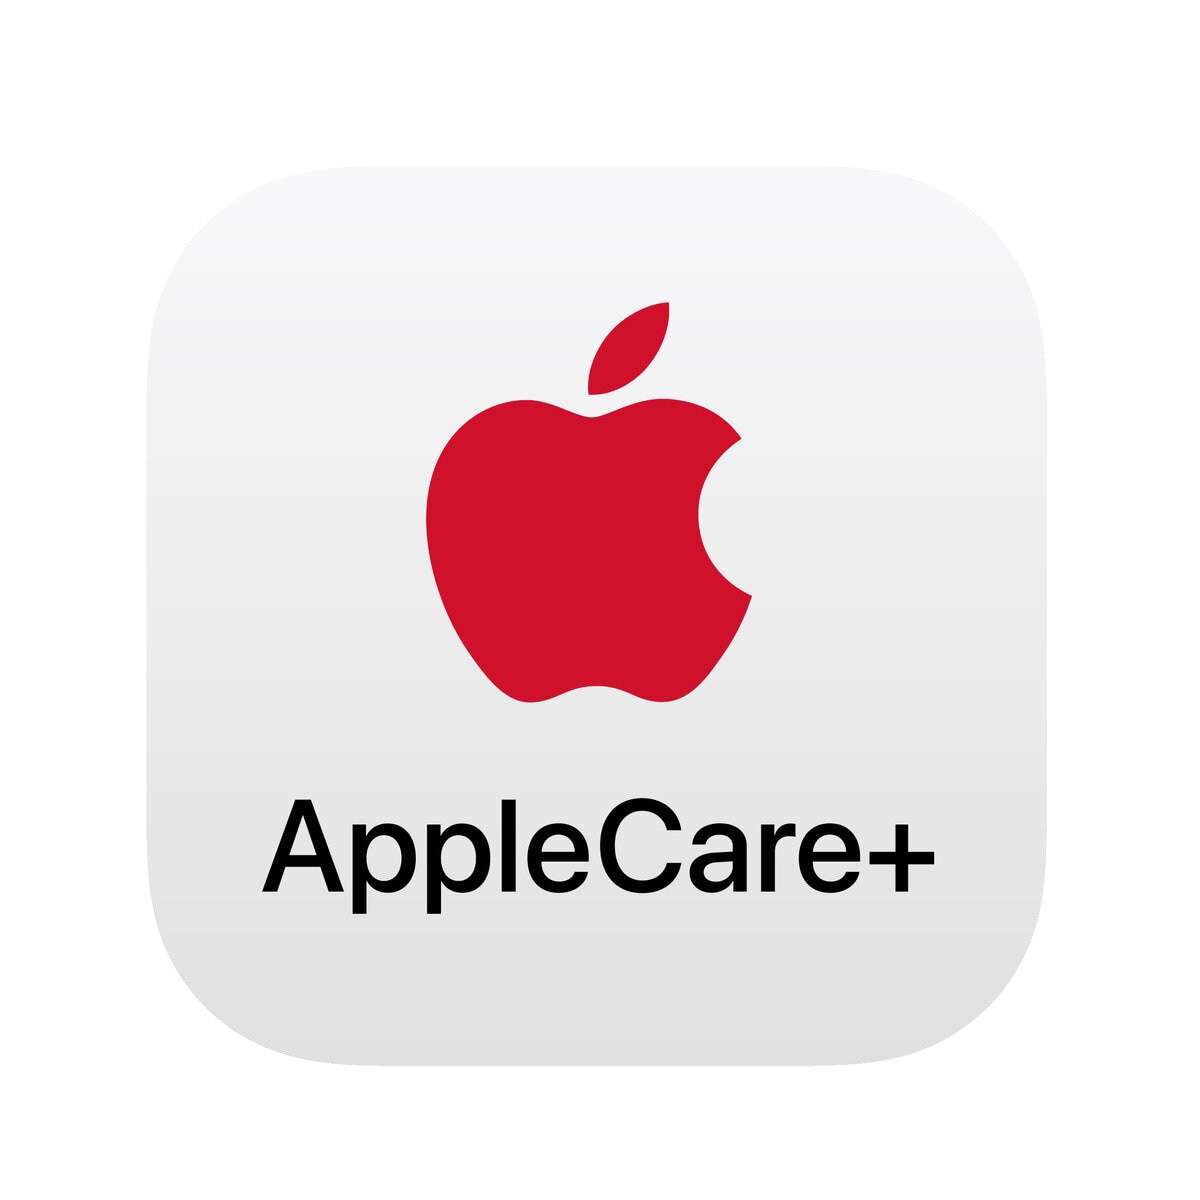 AirPods Pro 本体 Apple 正規品 Applecare＋保証付オーディオ機器